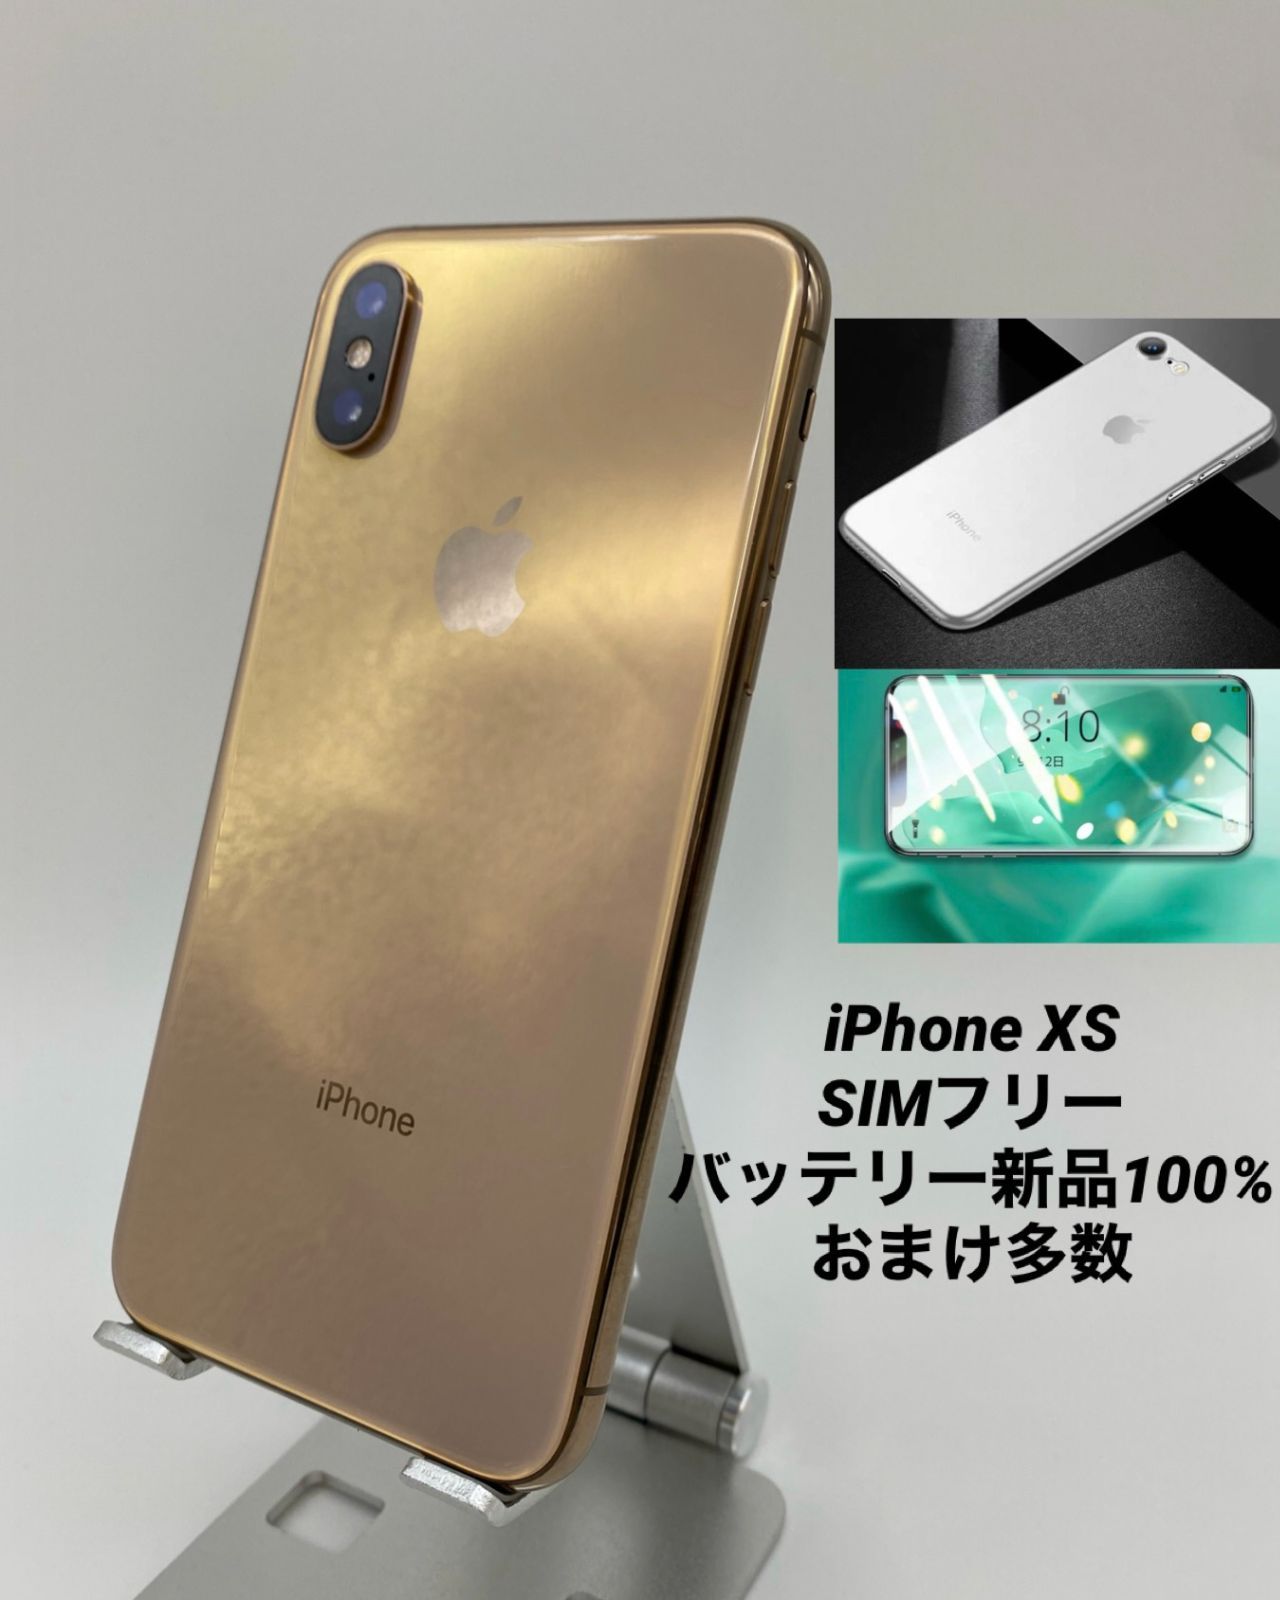 iPhone Xs Gold 512 GB SIMフリー - スマートフォン本体